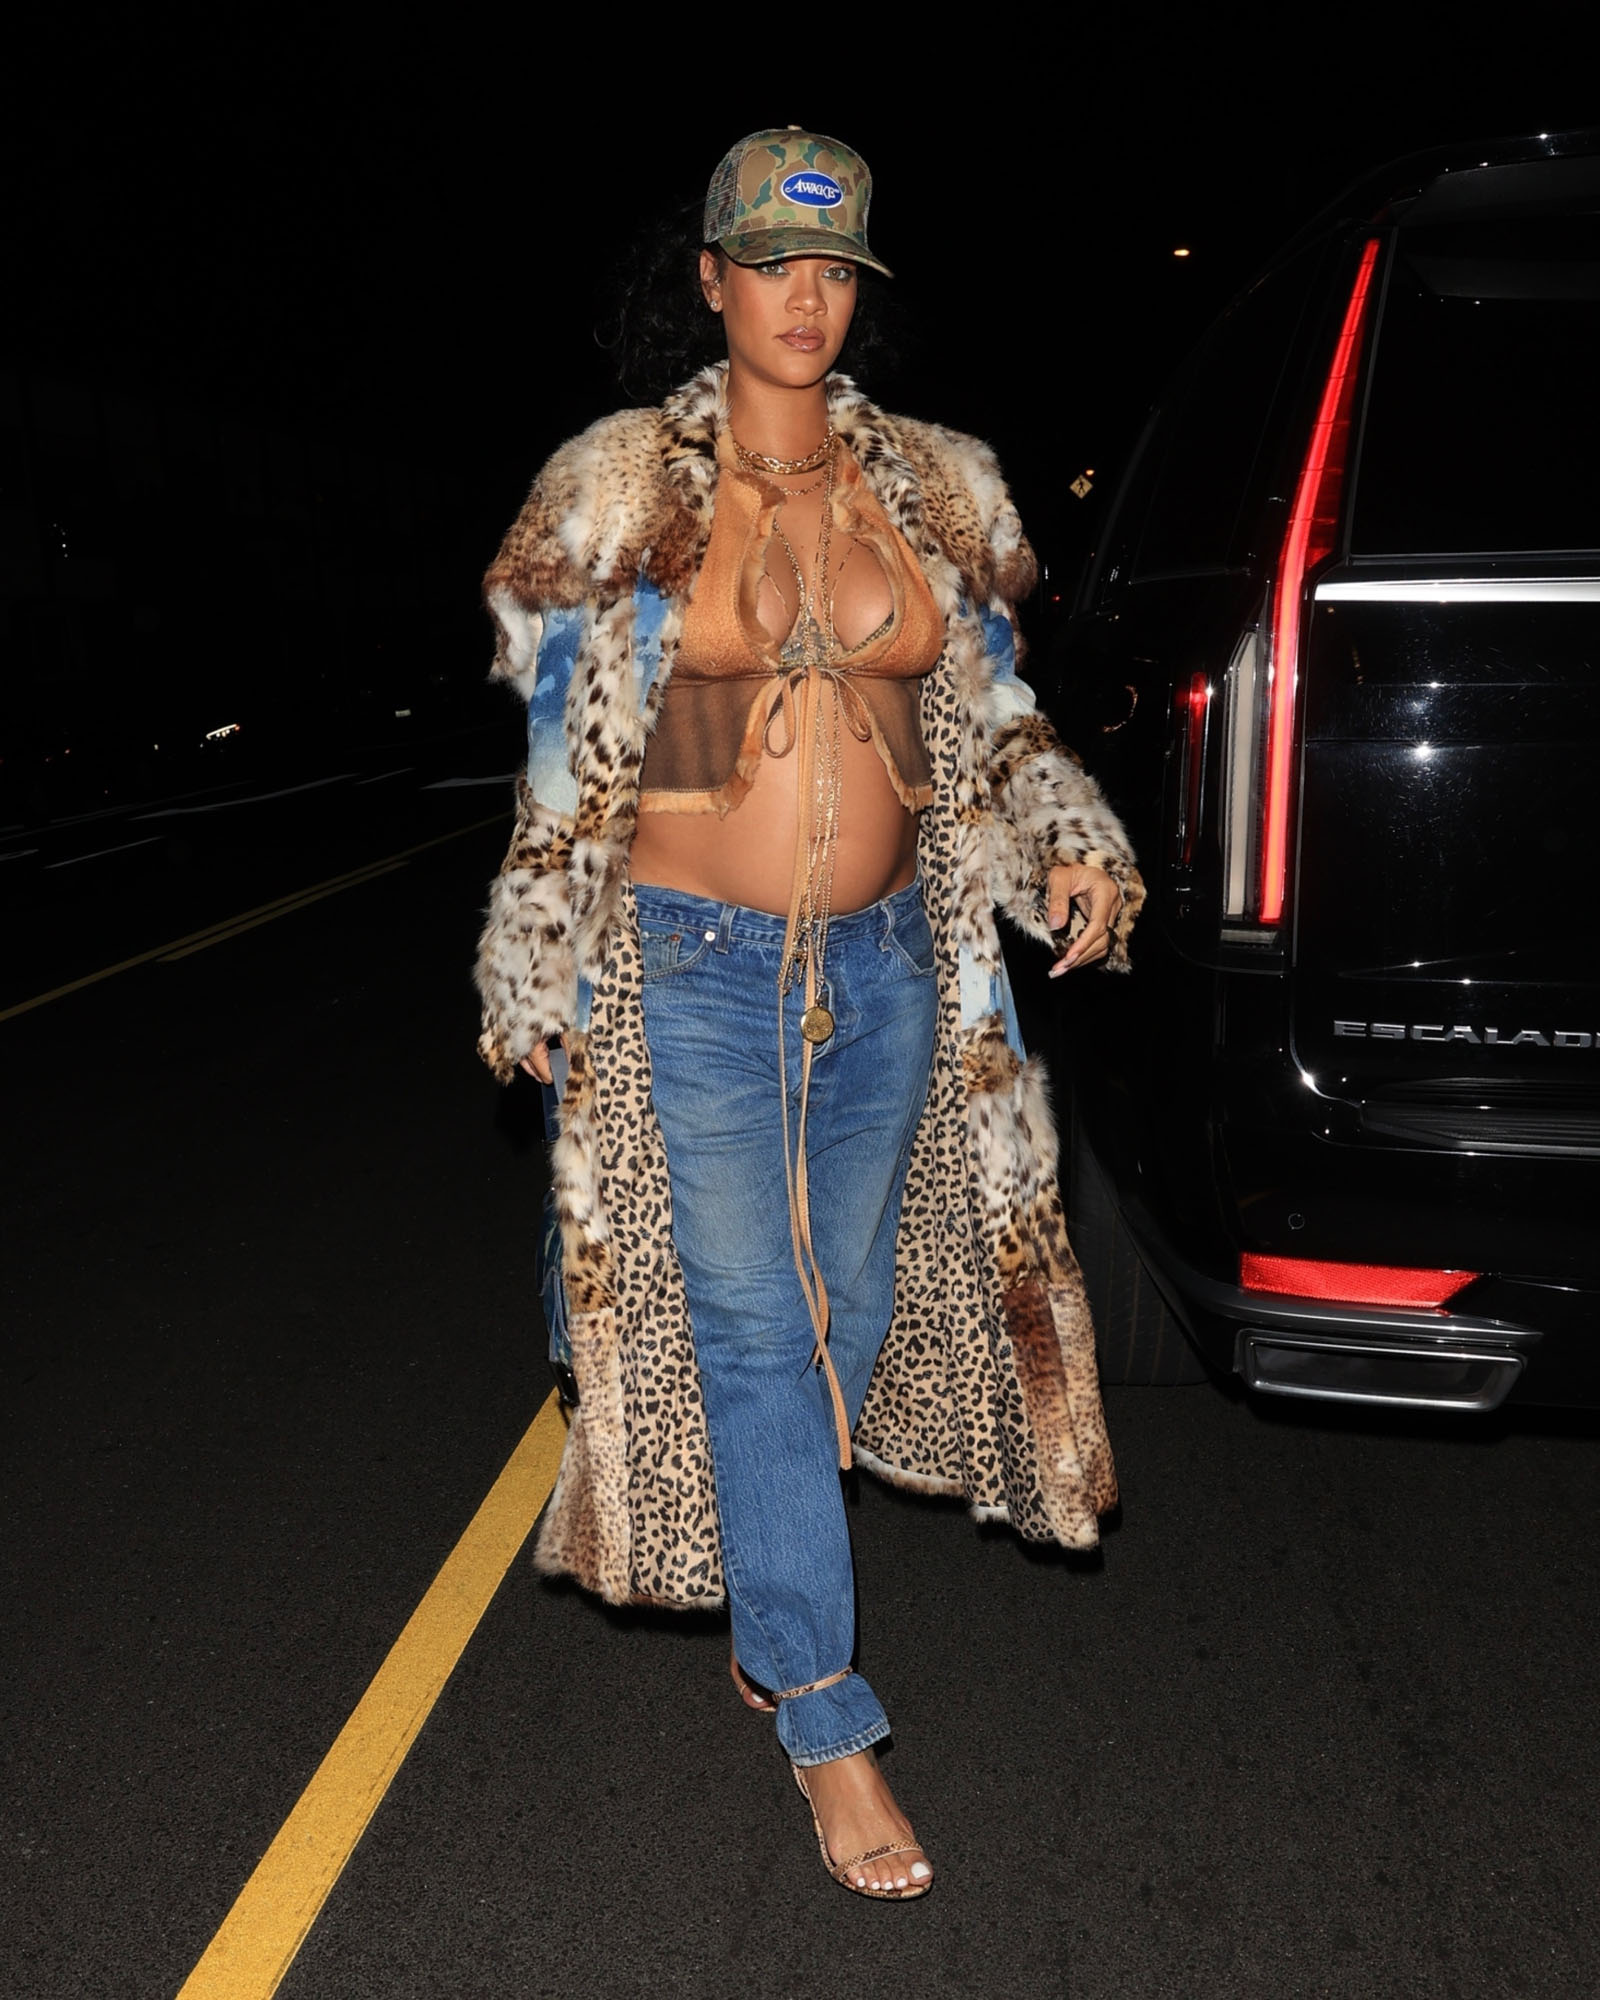 Rihanna Shows Off Her Abdominal Bump While Late Night Dinner at Giorgio Baldi's in Santa Monica, CA